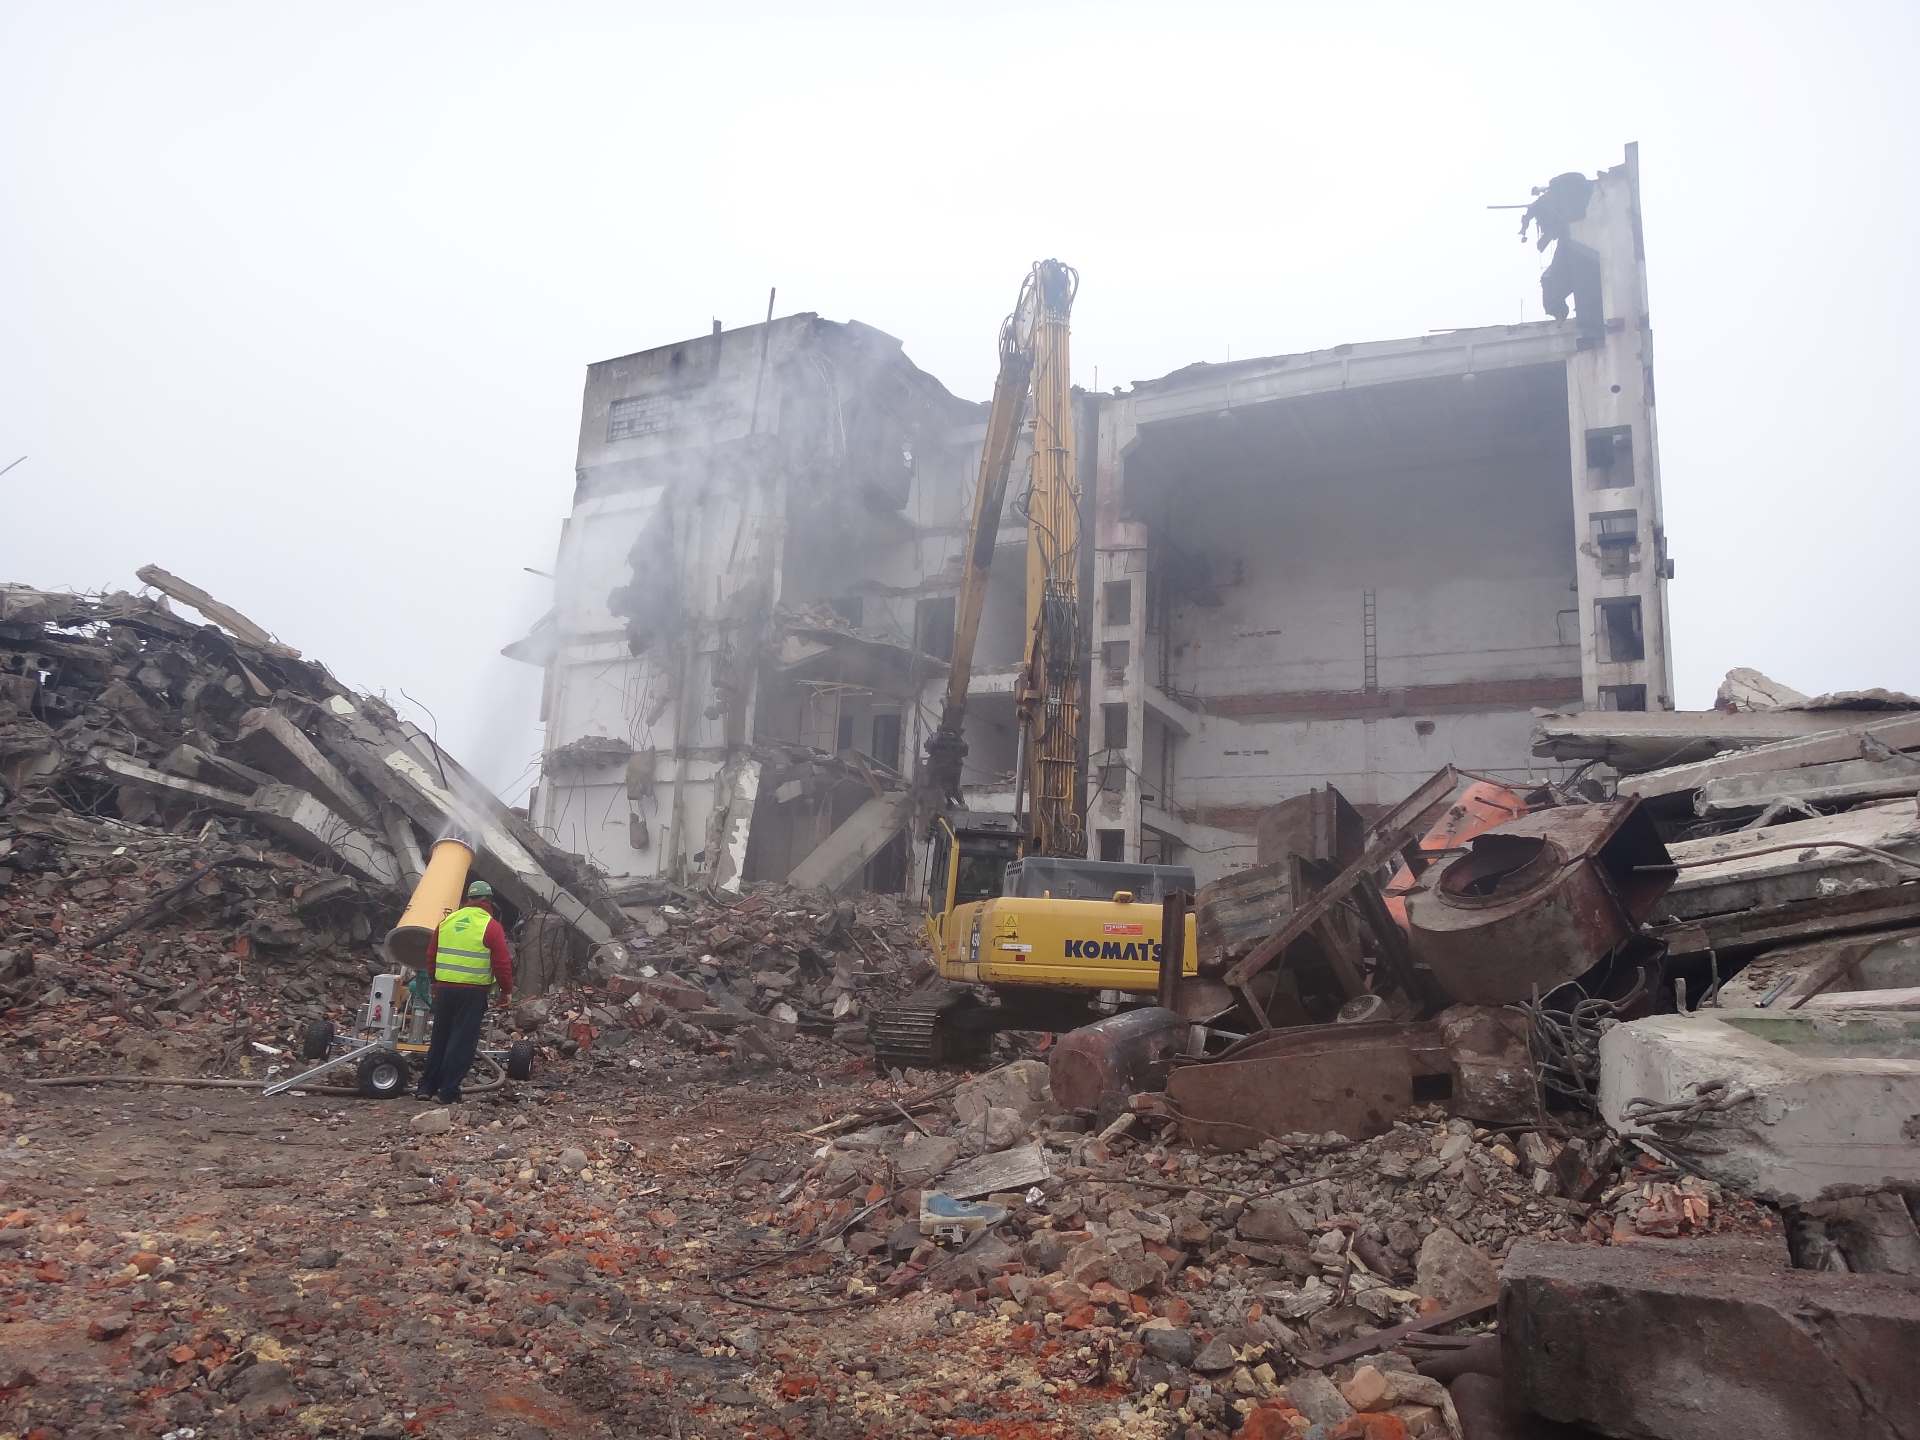 fog cannon at demolition site